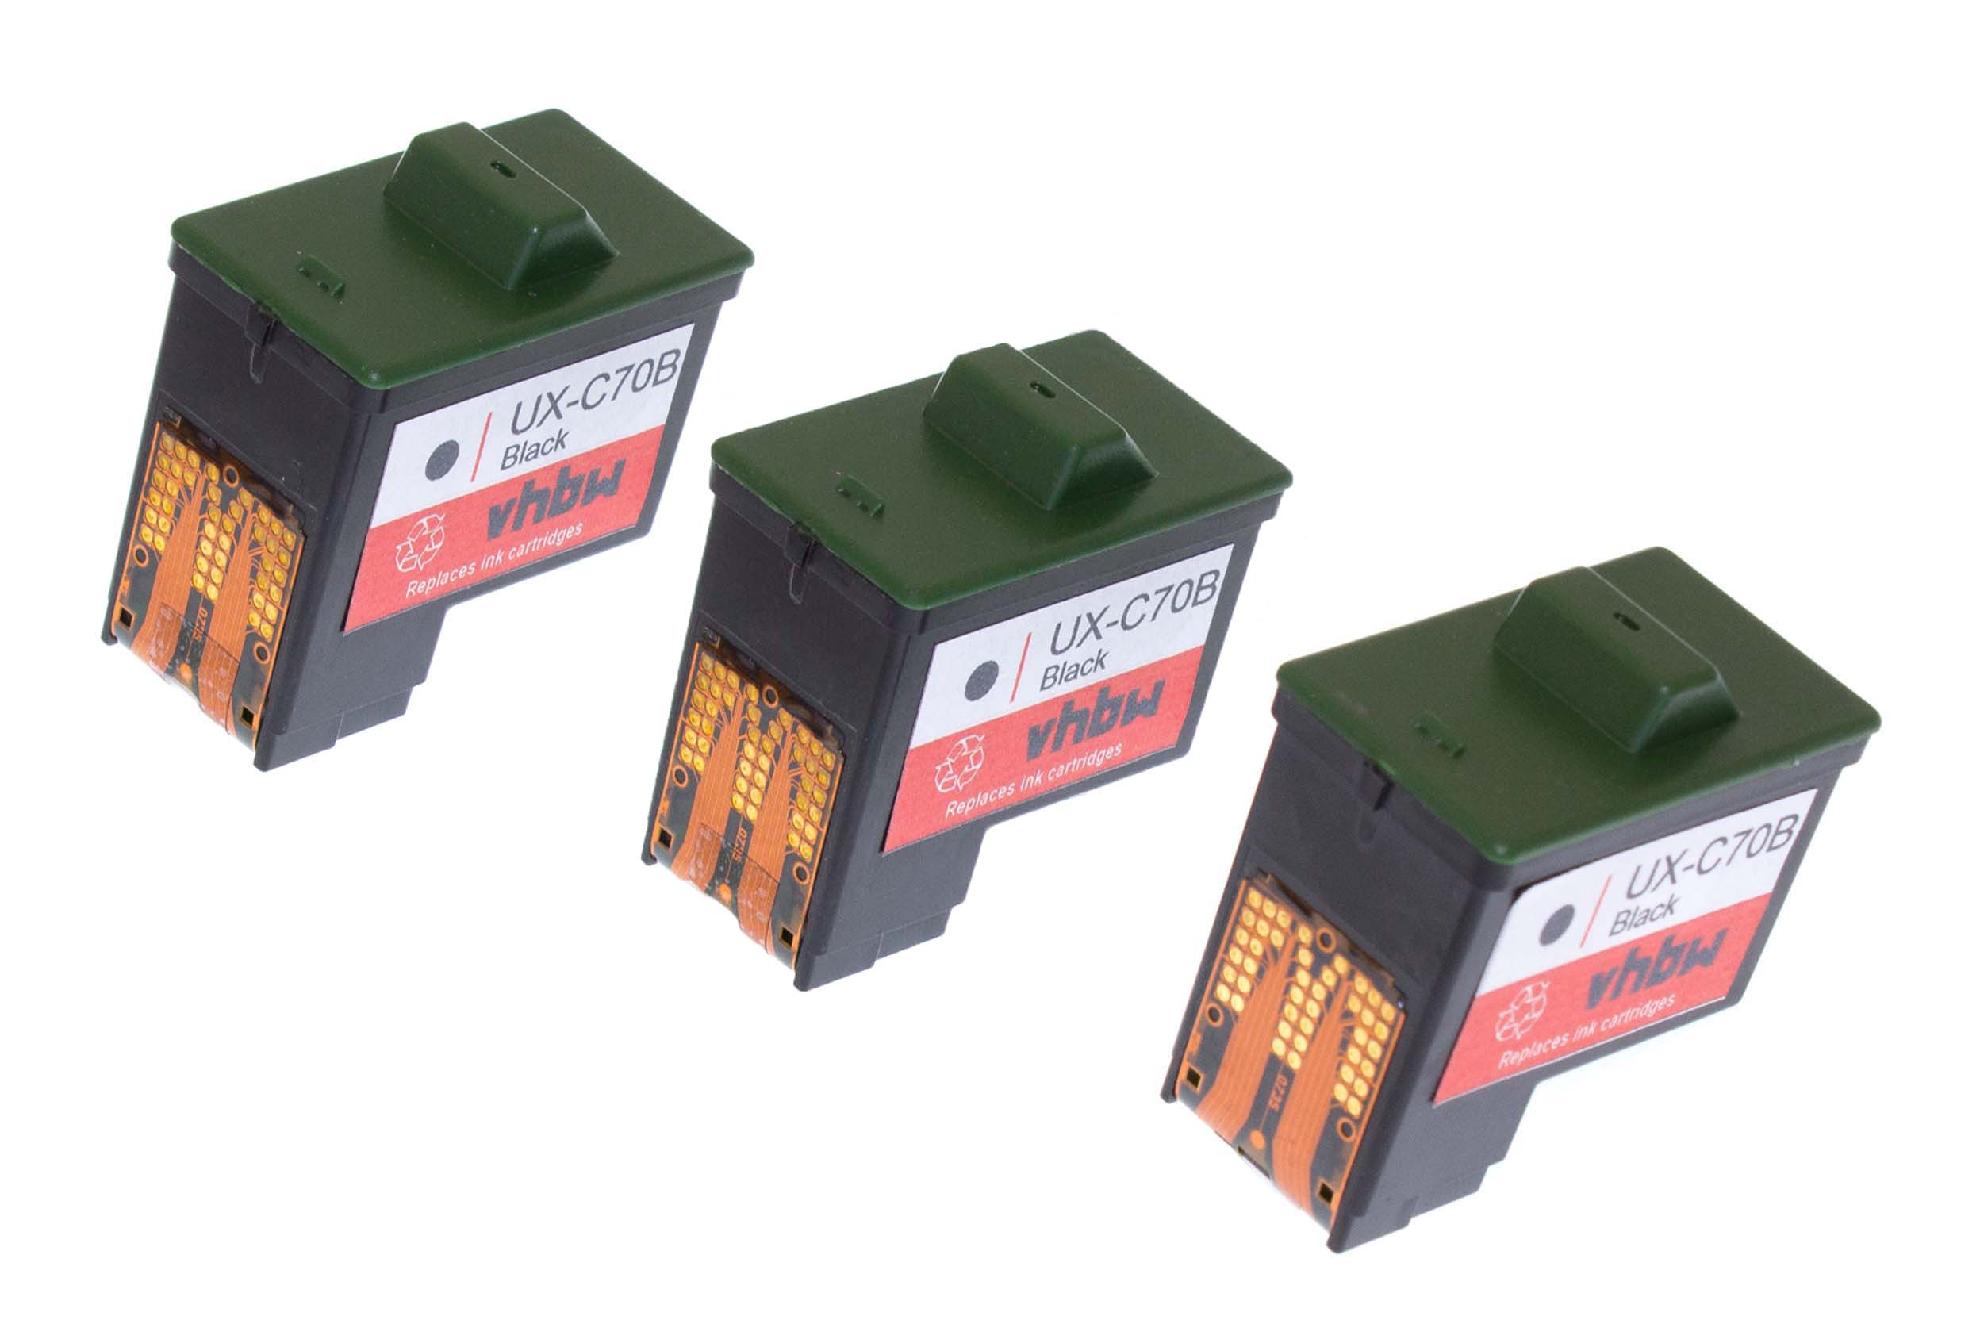 3x Ink Cartridges replaces Sharp UX-C70B for FO-B1600 Printer - black